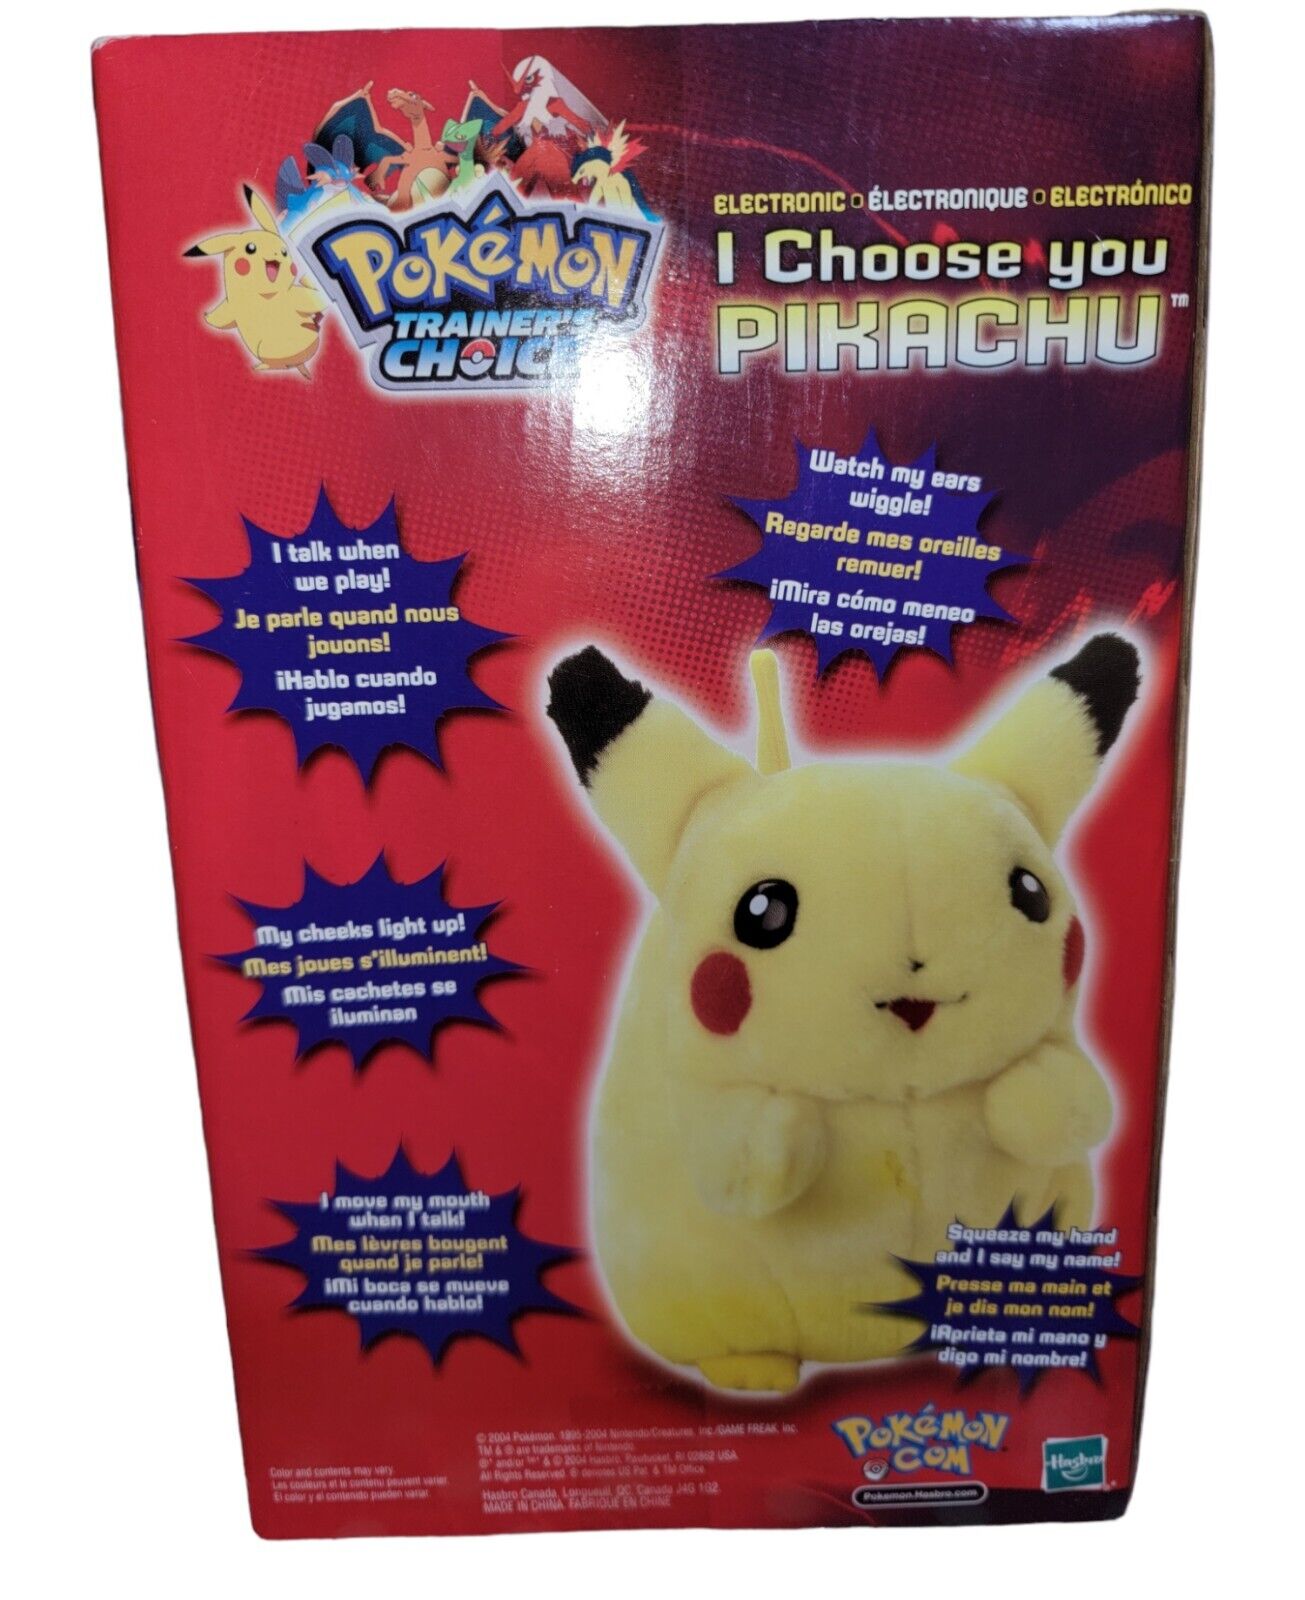 Pokémon 2004 "I Choose You Pikachu" Trainer's Choice Electronic Talking Plush